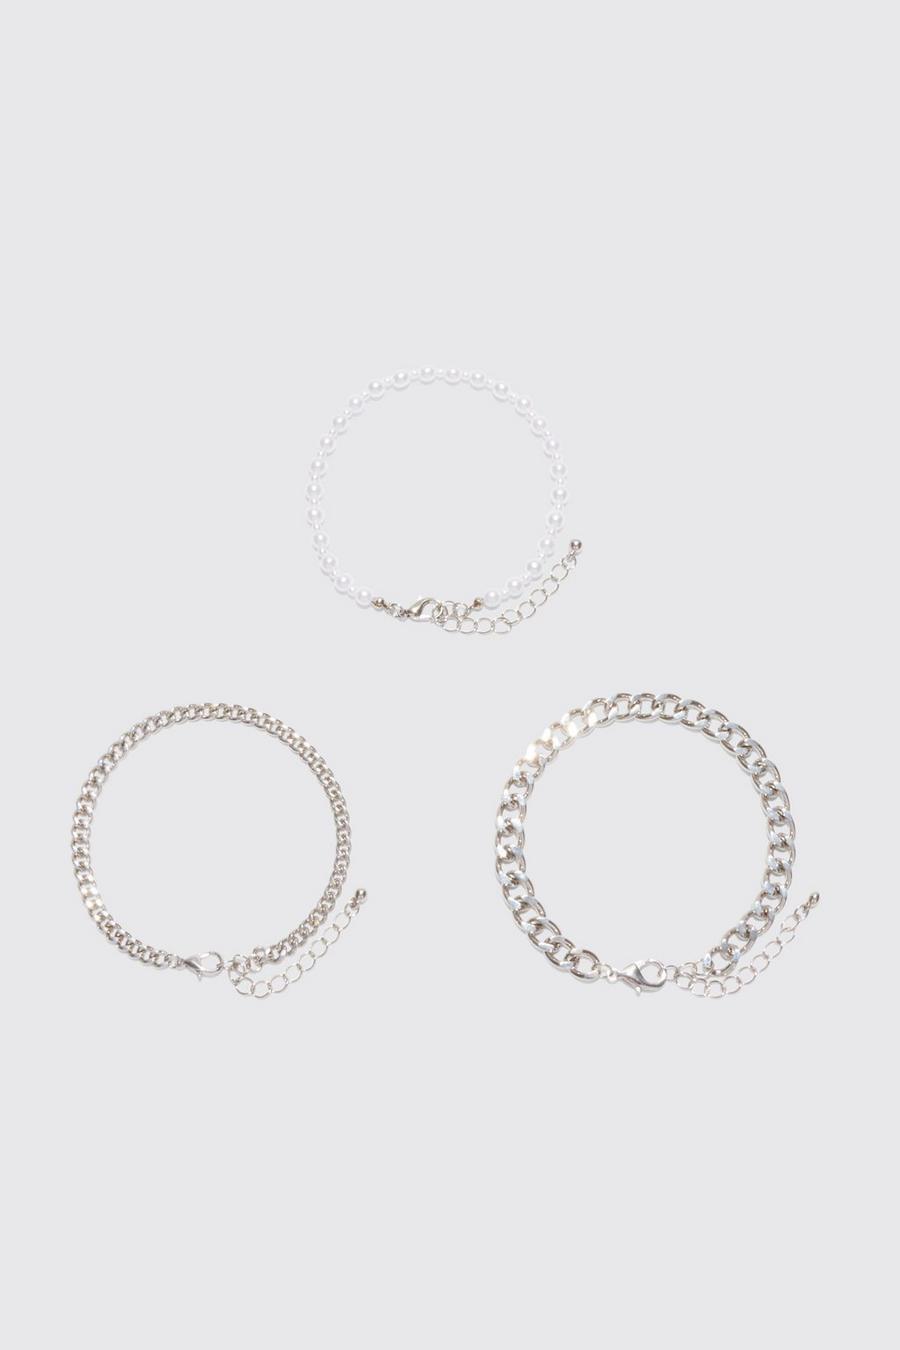 Silver Multi Layer Chain Bracelet